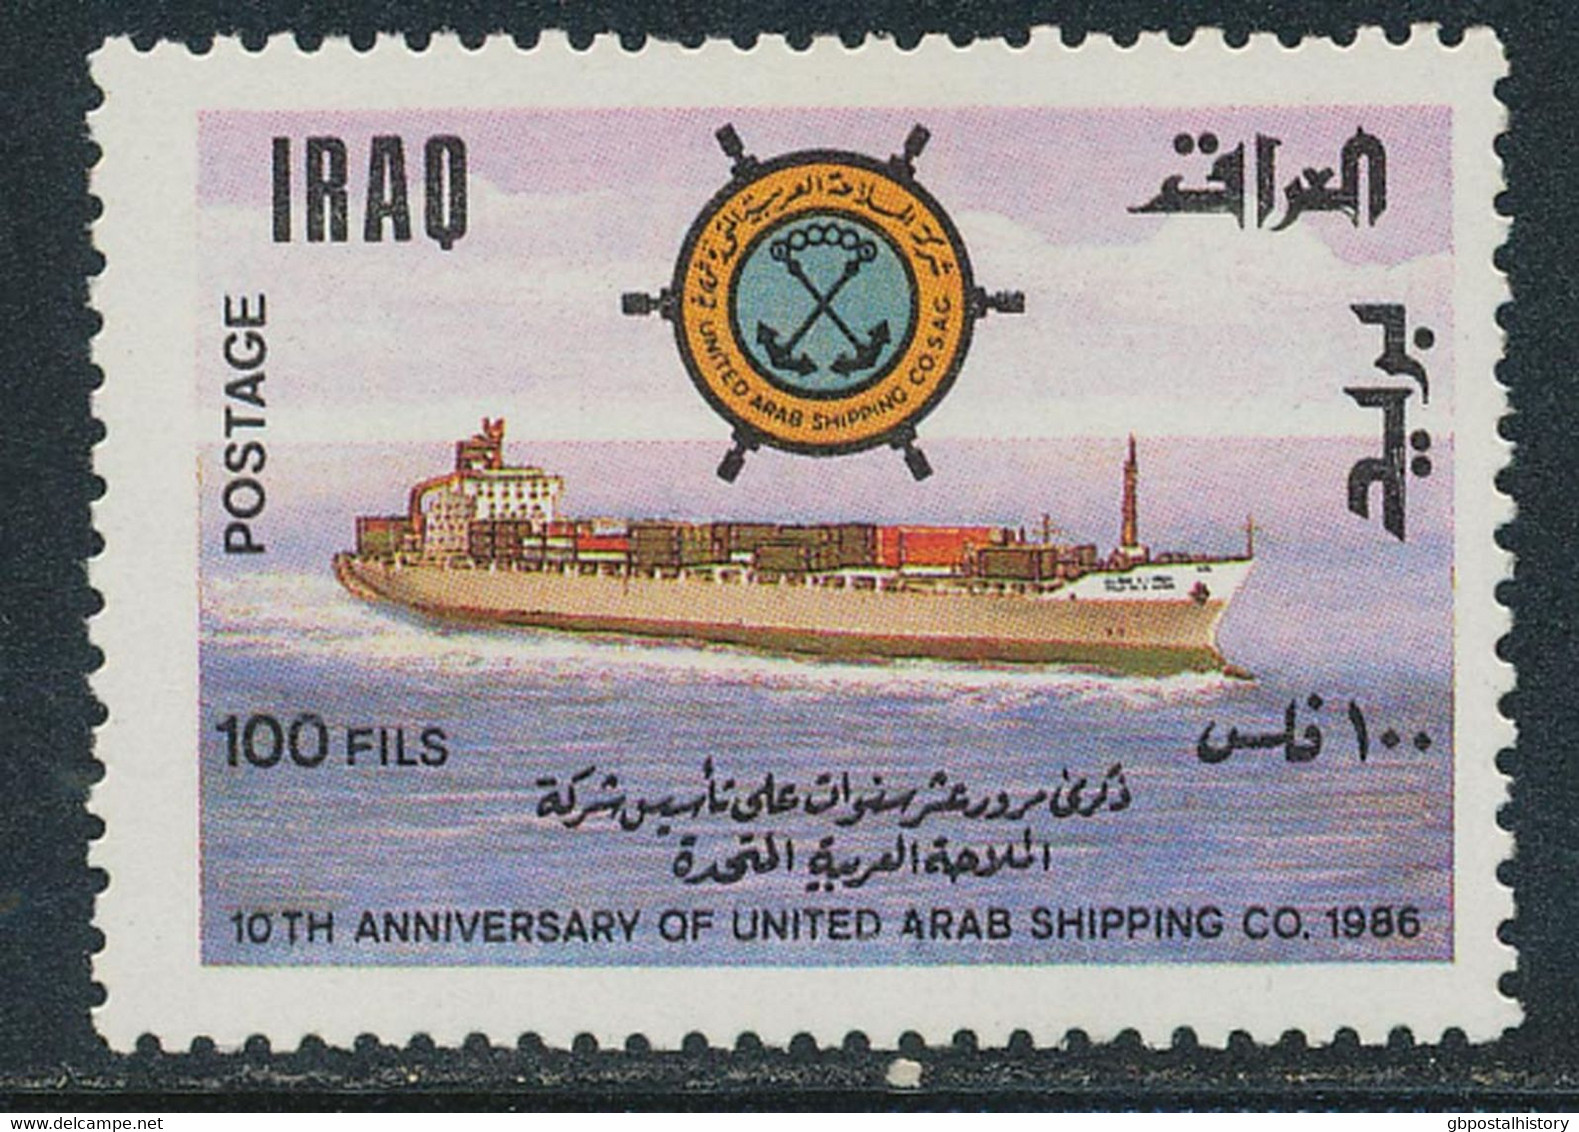 IRAQ 1987, 10 Years Arabic Shipping Company 100 F. Superb U/M, MAJOR VARIETY: Missing Colors Gray And Dark Green, - Irak